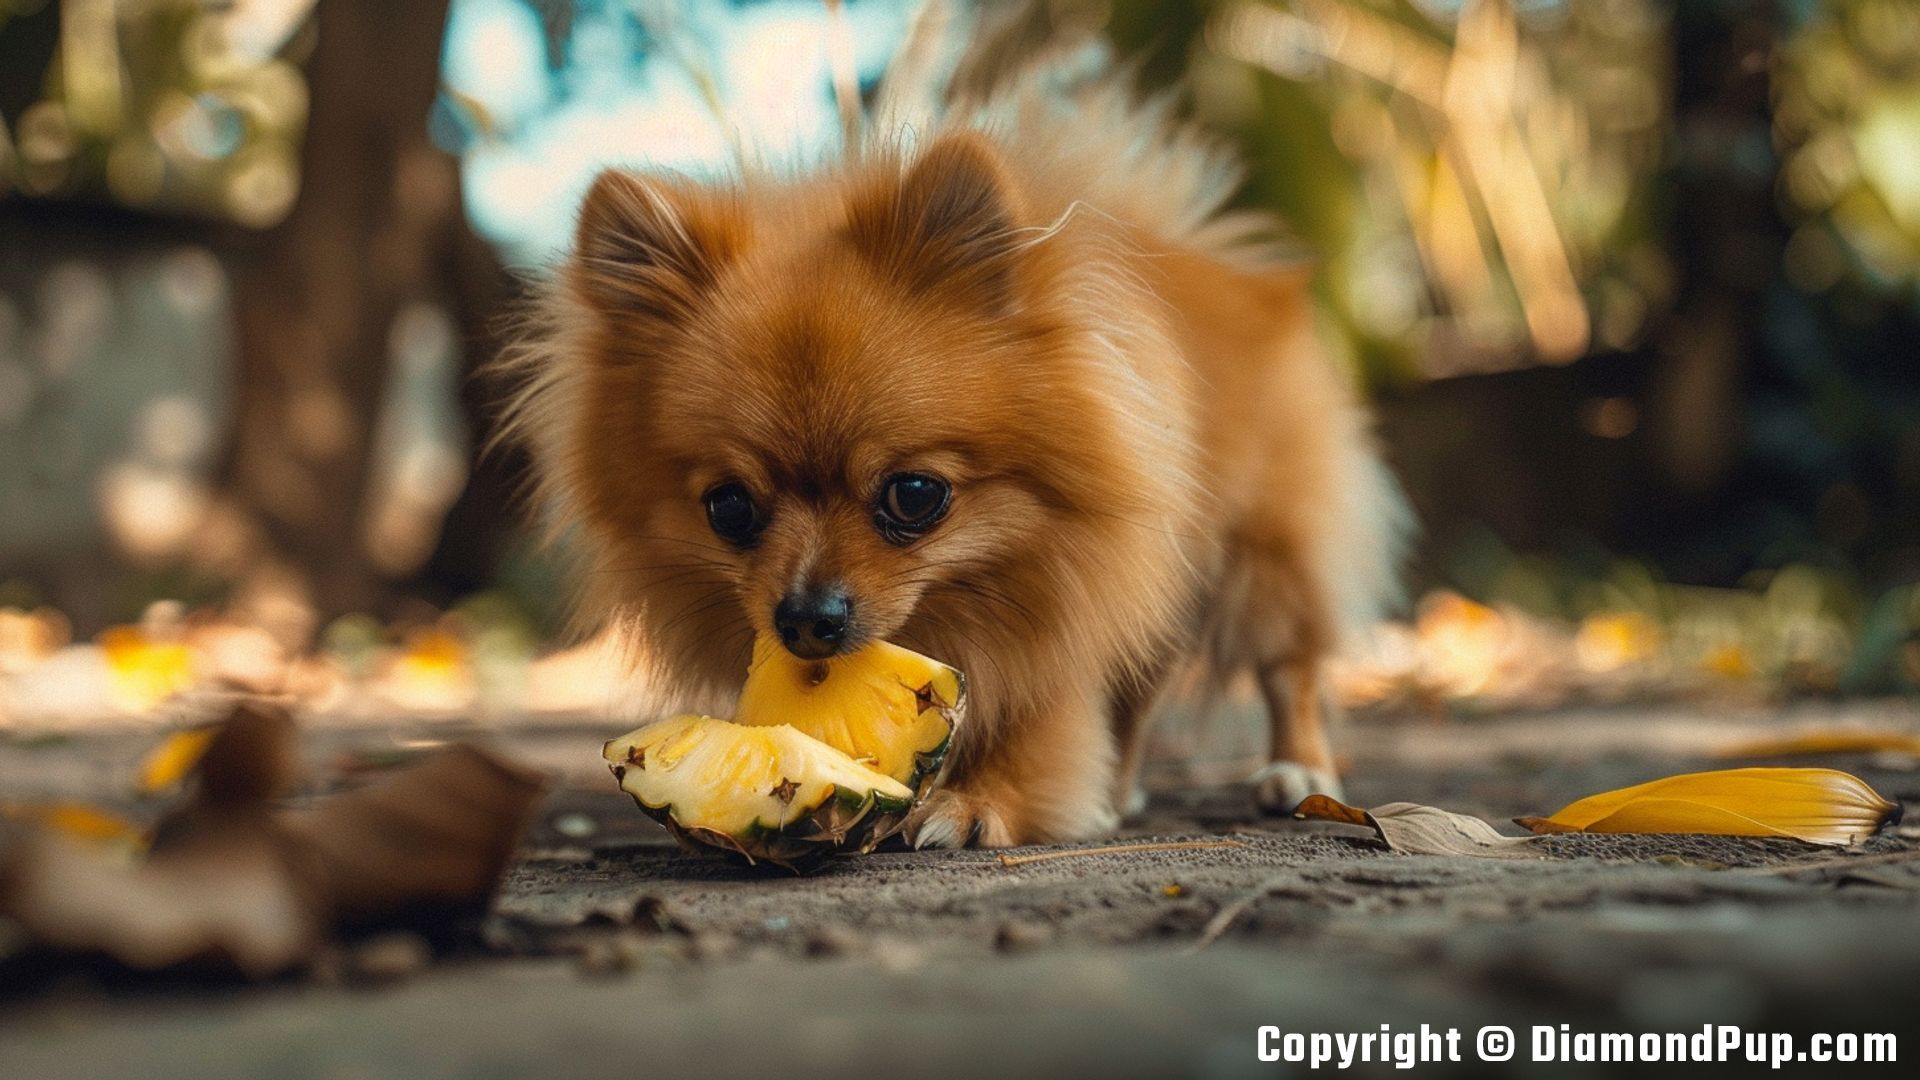 Image of an Adorable Pomeranian Eating Pineapple